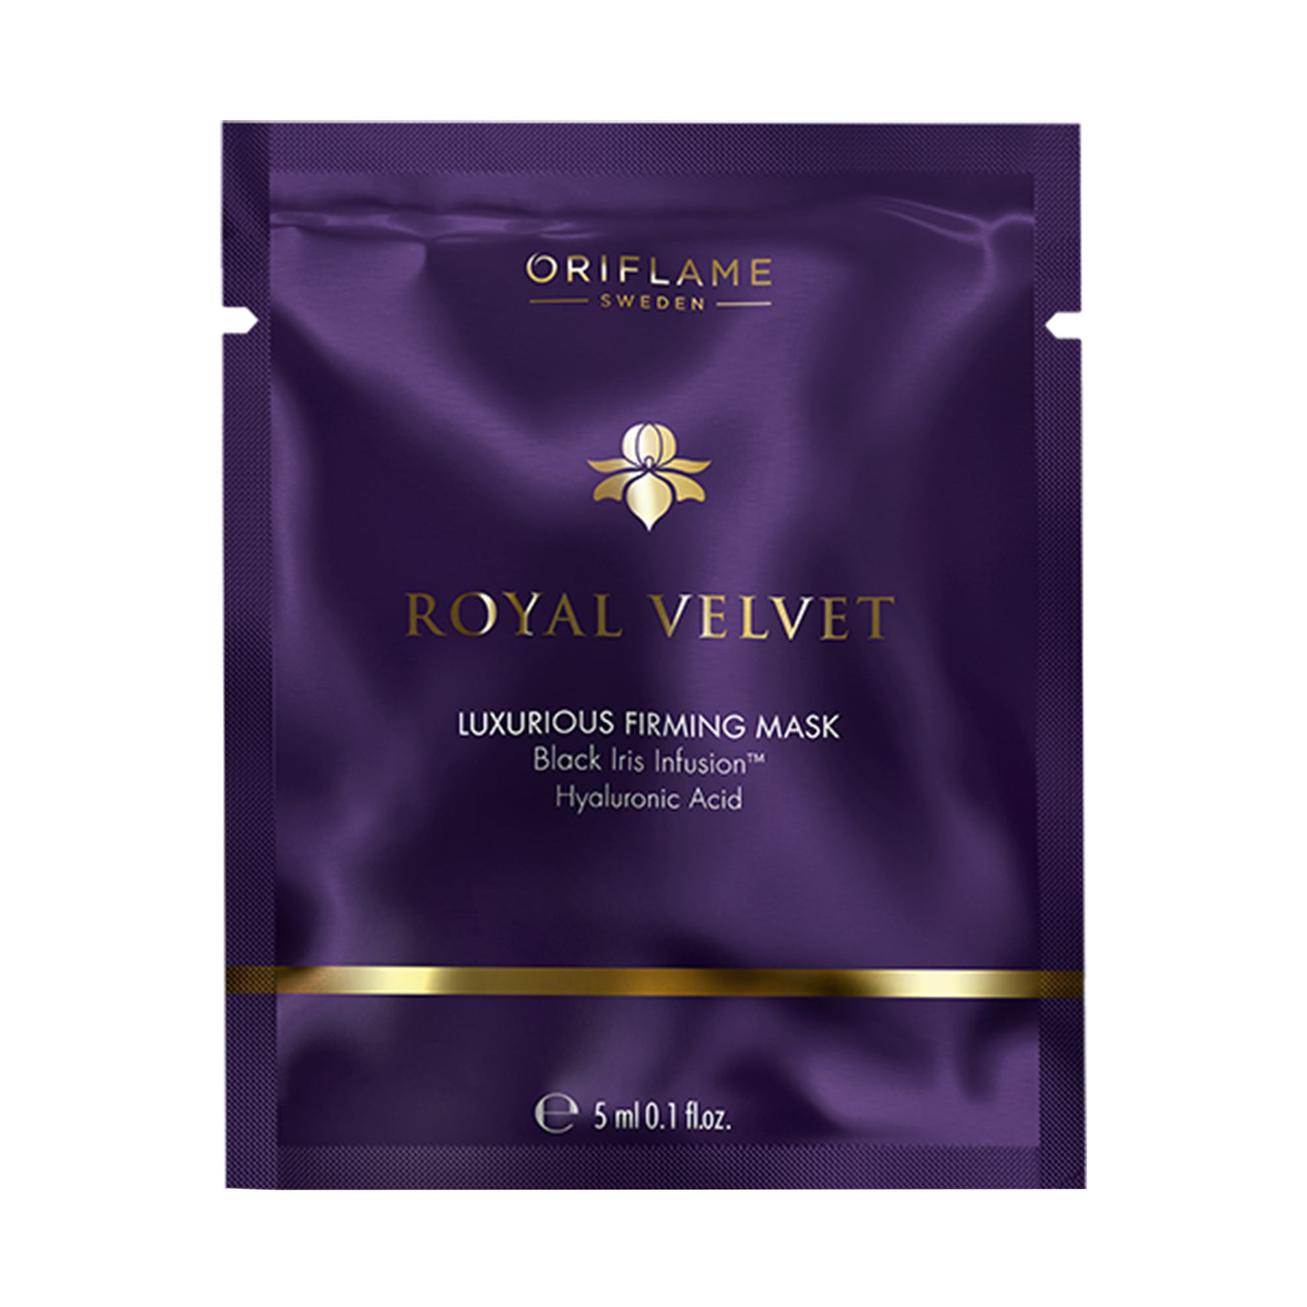 Oferta de Mascarilla Reafirmante Royal Velvet por S/ 7,9 en Oriflame